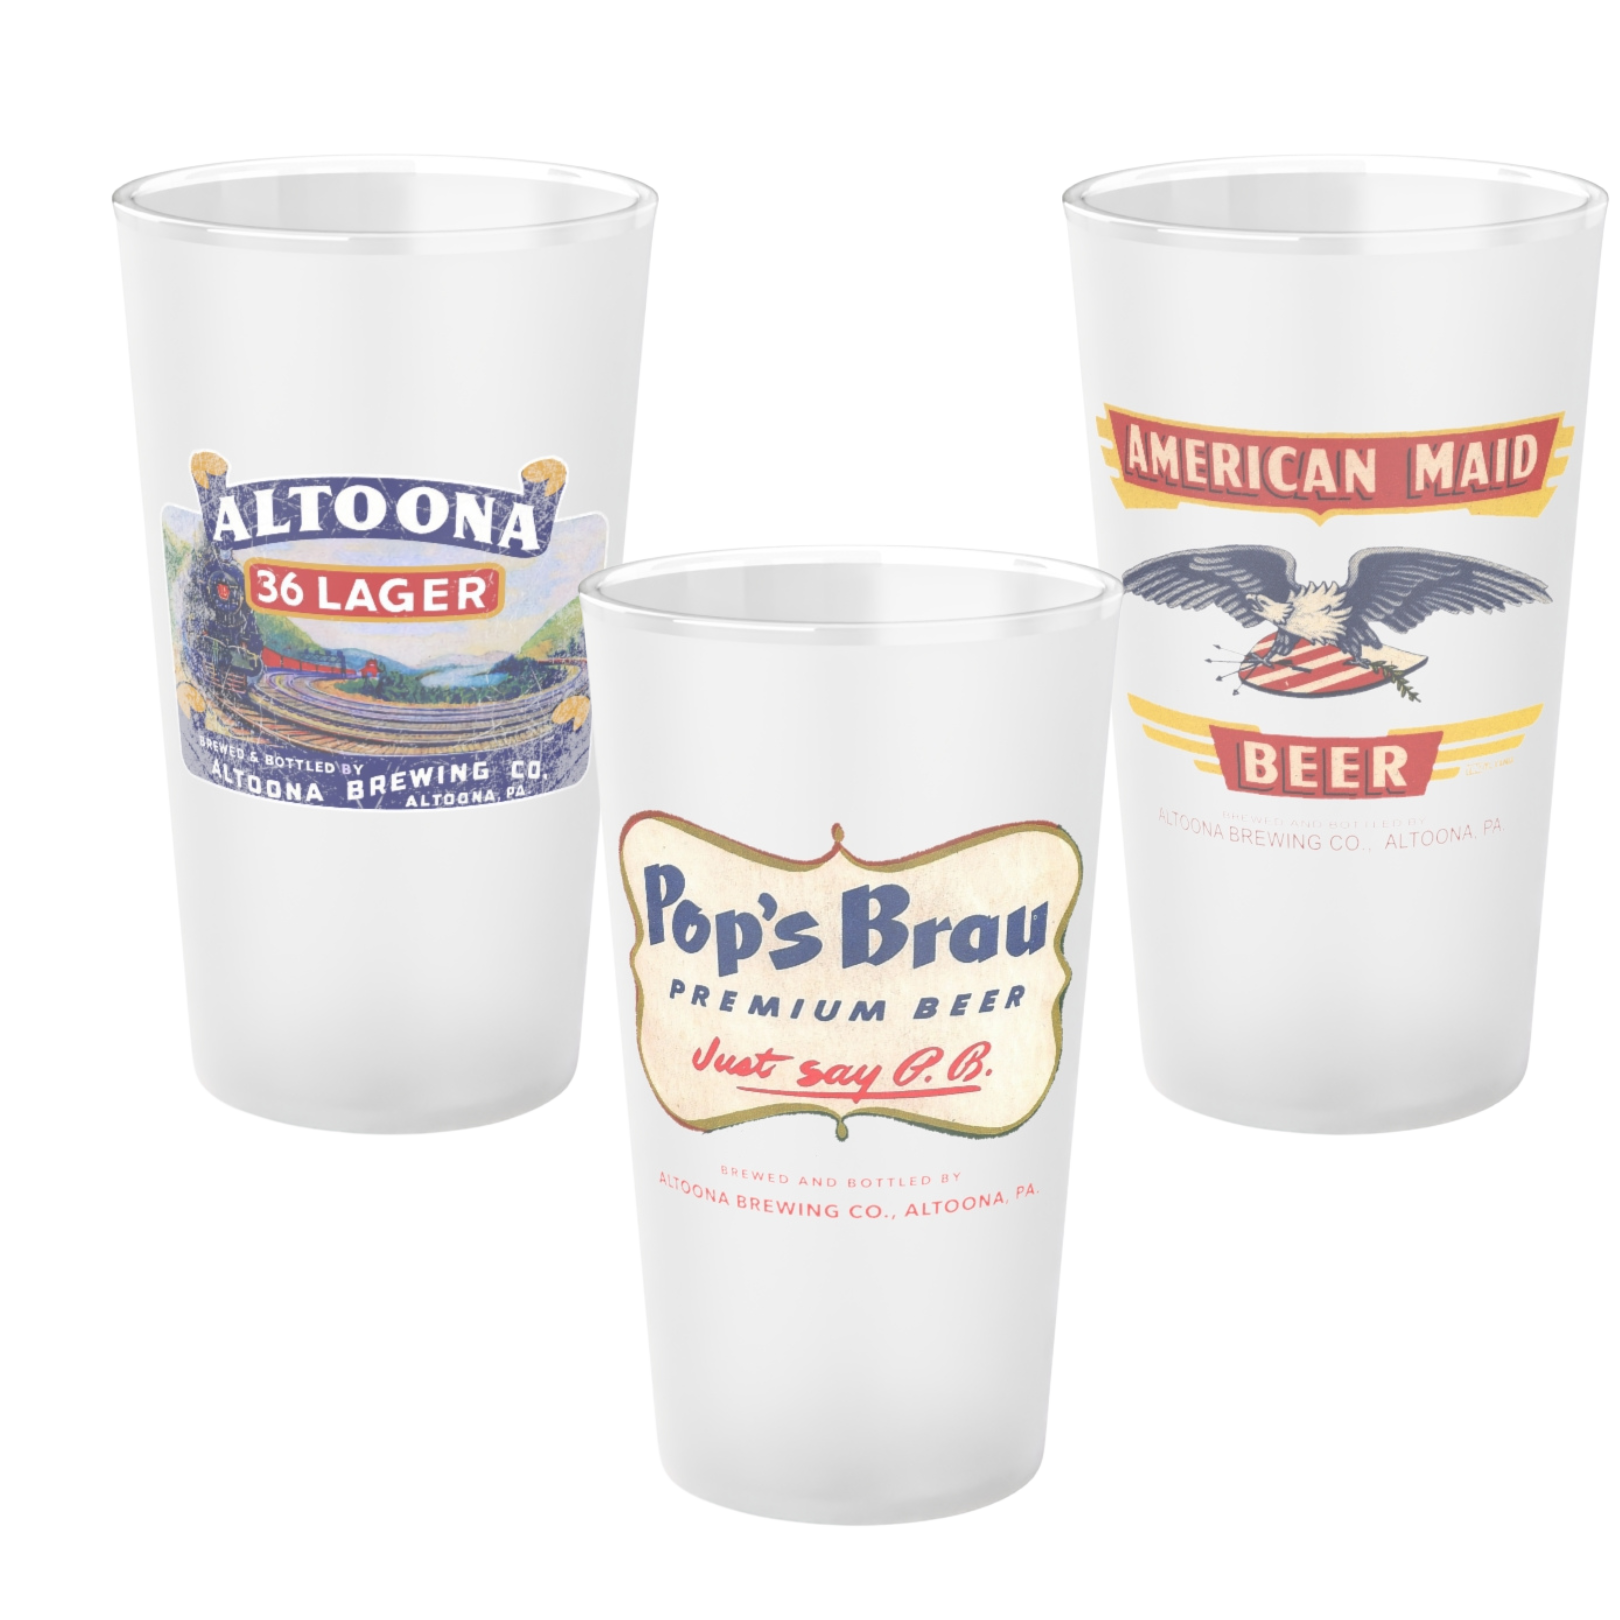 Altoona Brewing Retro Brew Set of 3 Pint Glasses | Altoona 36 Lager | Pop's Brau | American Maid - Yinzylvania